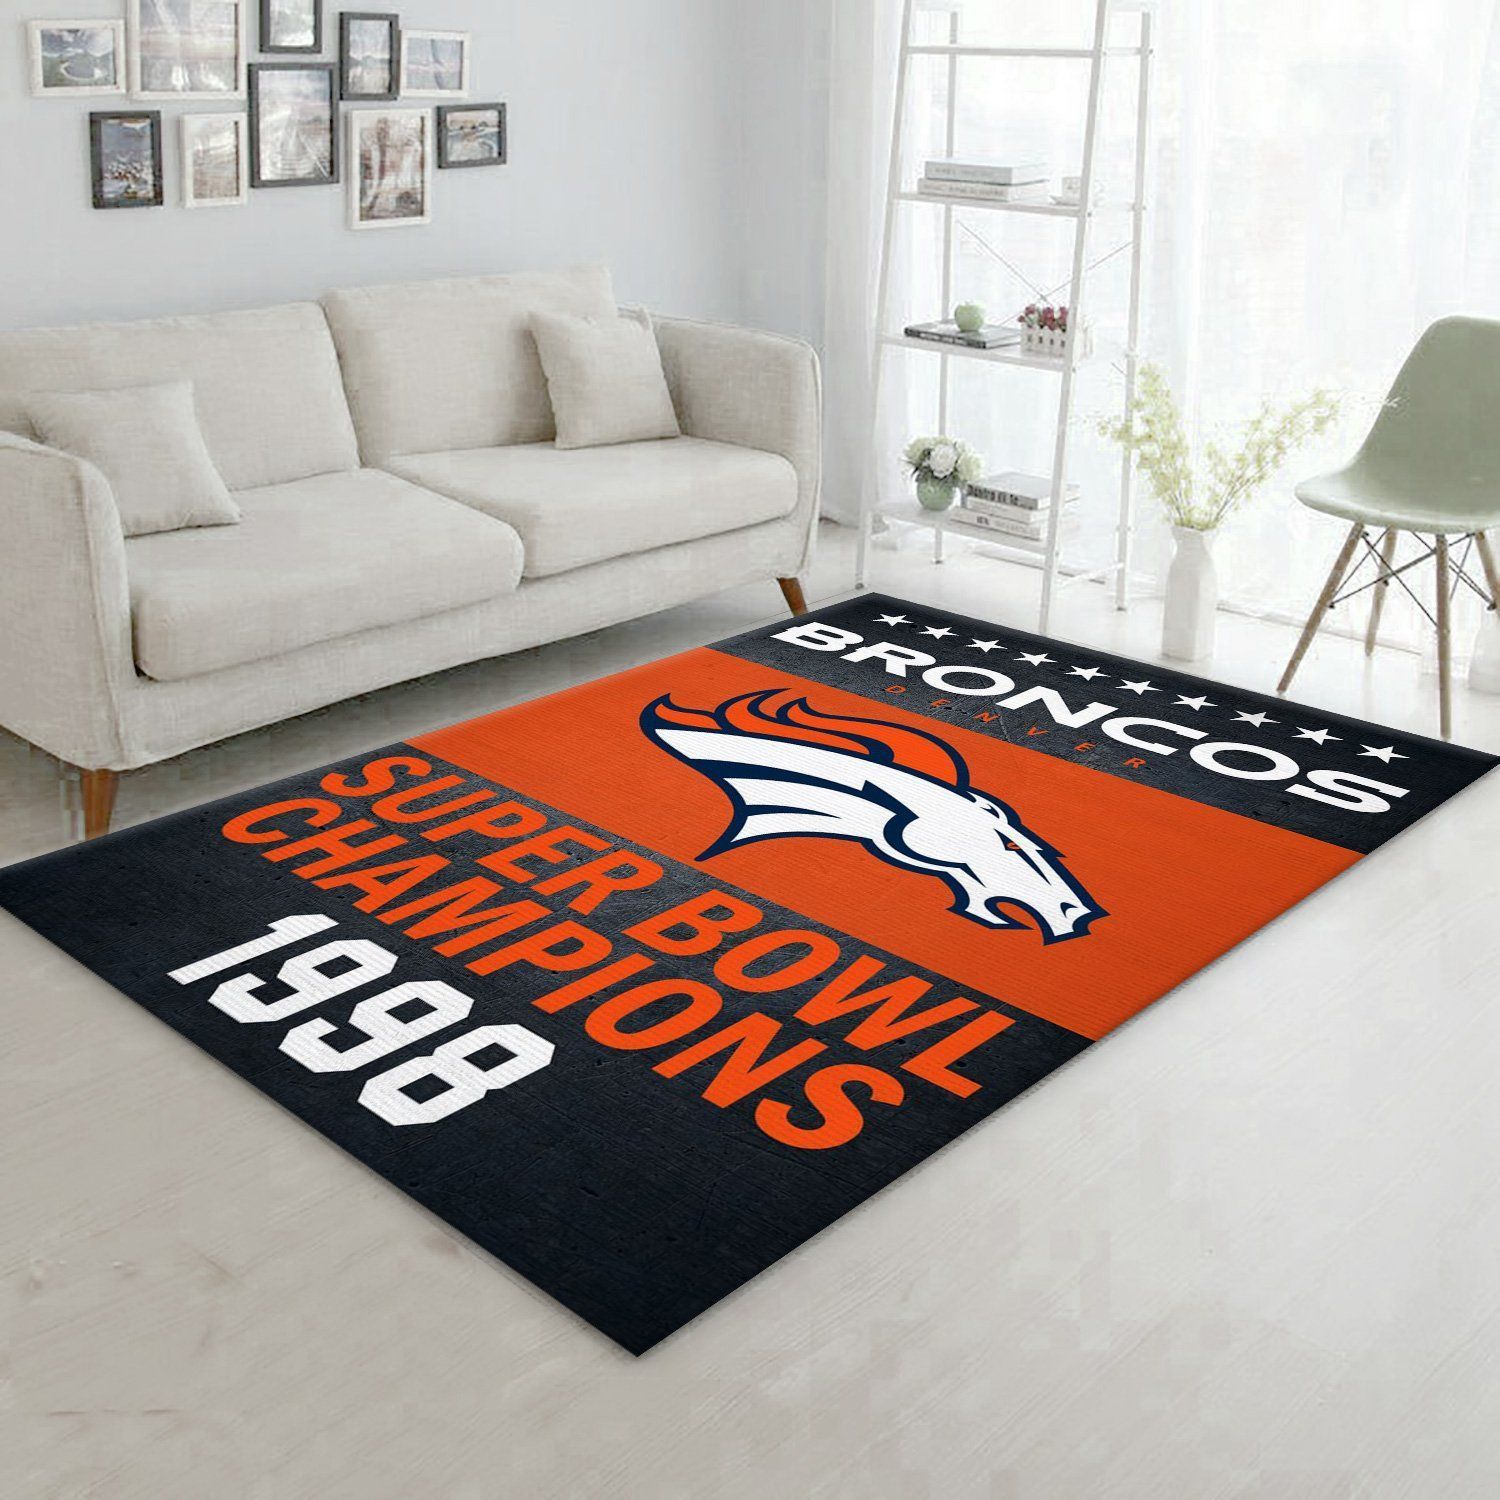 Denver Broncos 1998 Nfl Football Team Area Rug For Gift Living Room Rug Home US Decor - Indoor Outdoor Rugs 2